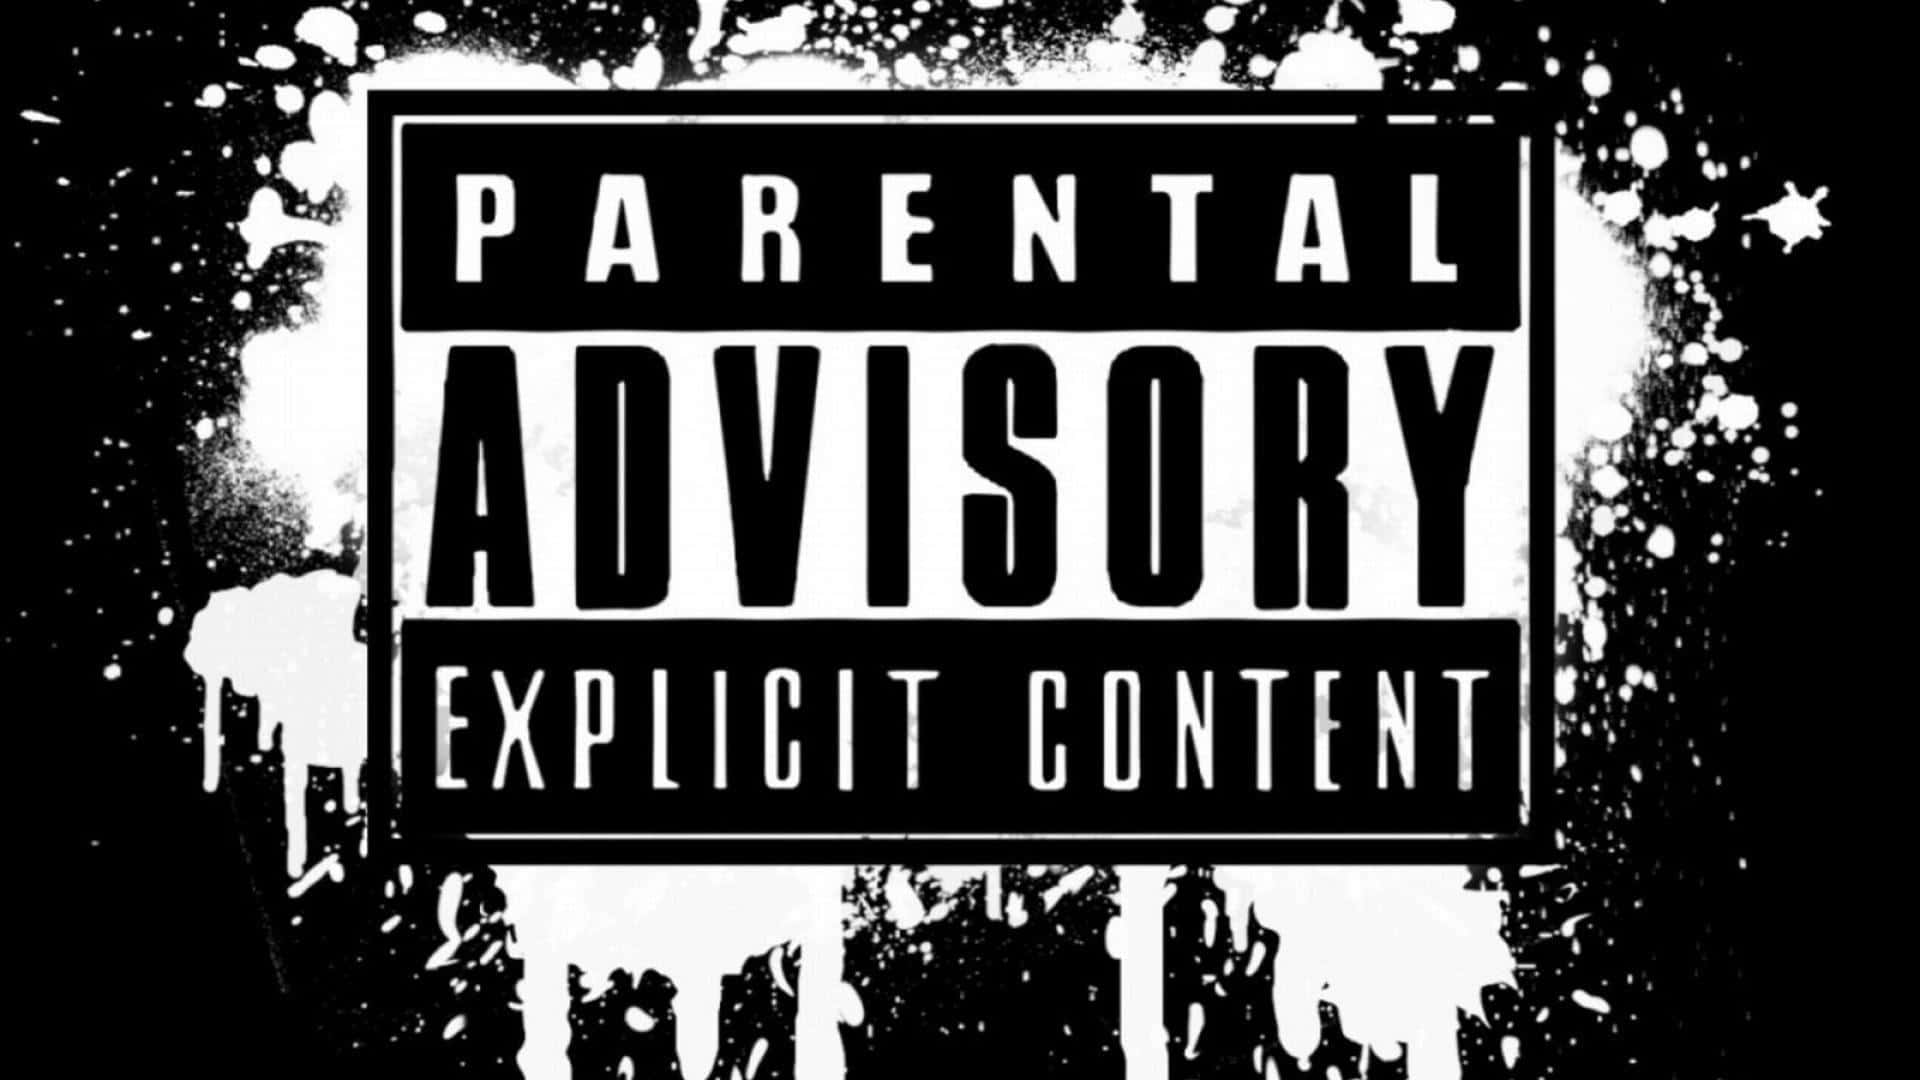 Parental Advisory - Explicit Content Wallpaper